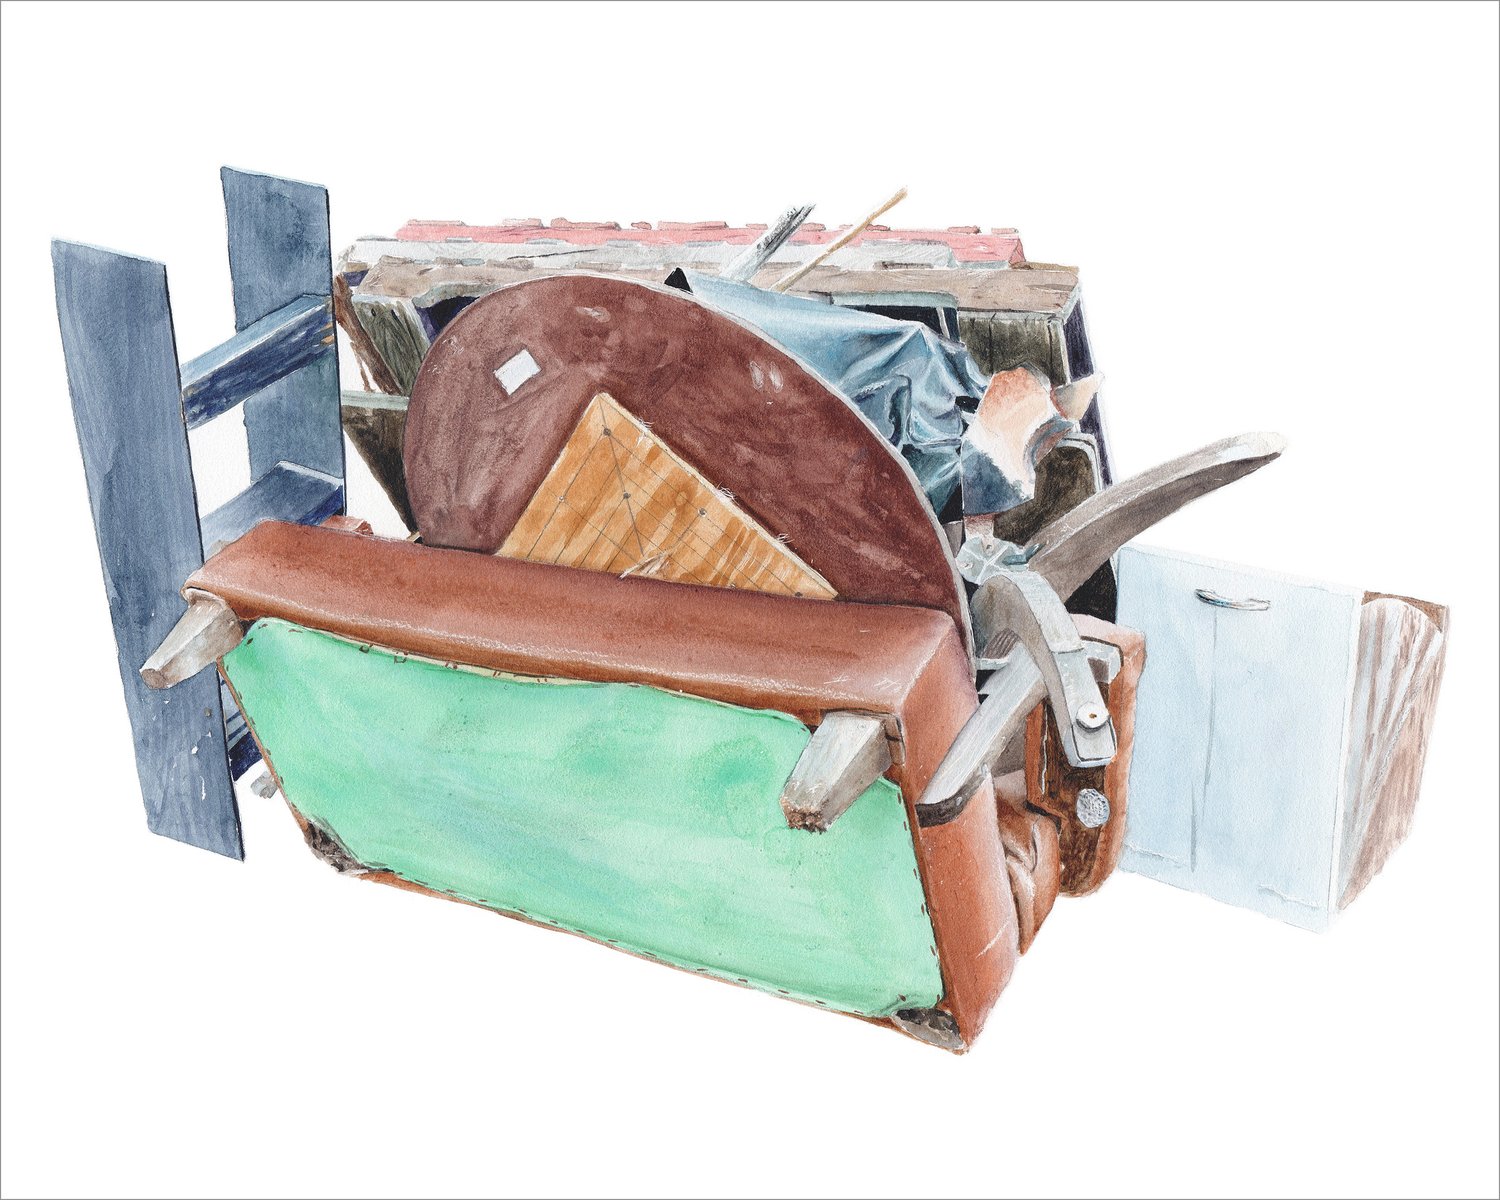 Discard Pile 41 by Jason Webb - Original Paining